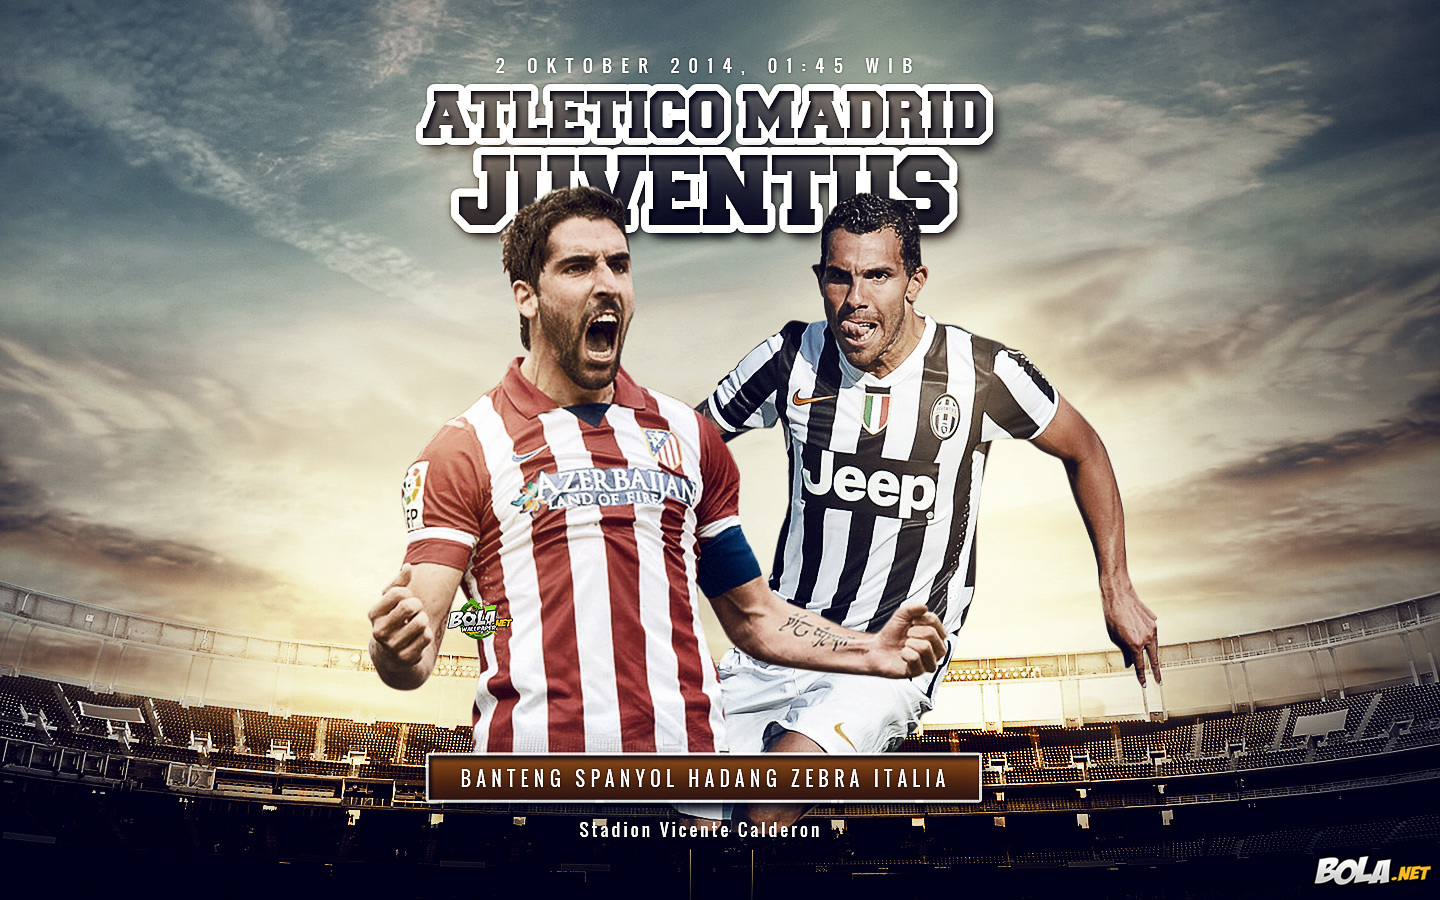 Deskripsi : Wallpaper Atletico Madrid Vs Juventus, size: 1440x900